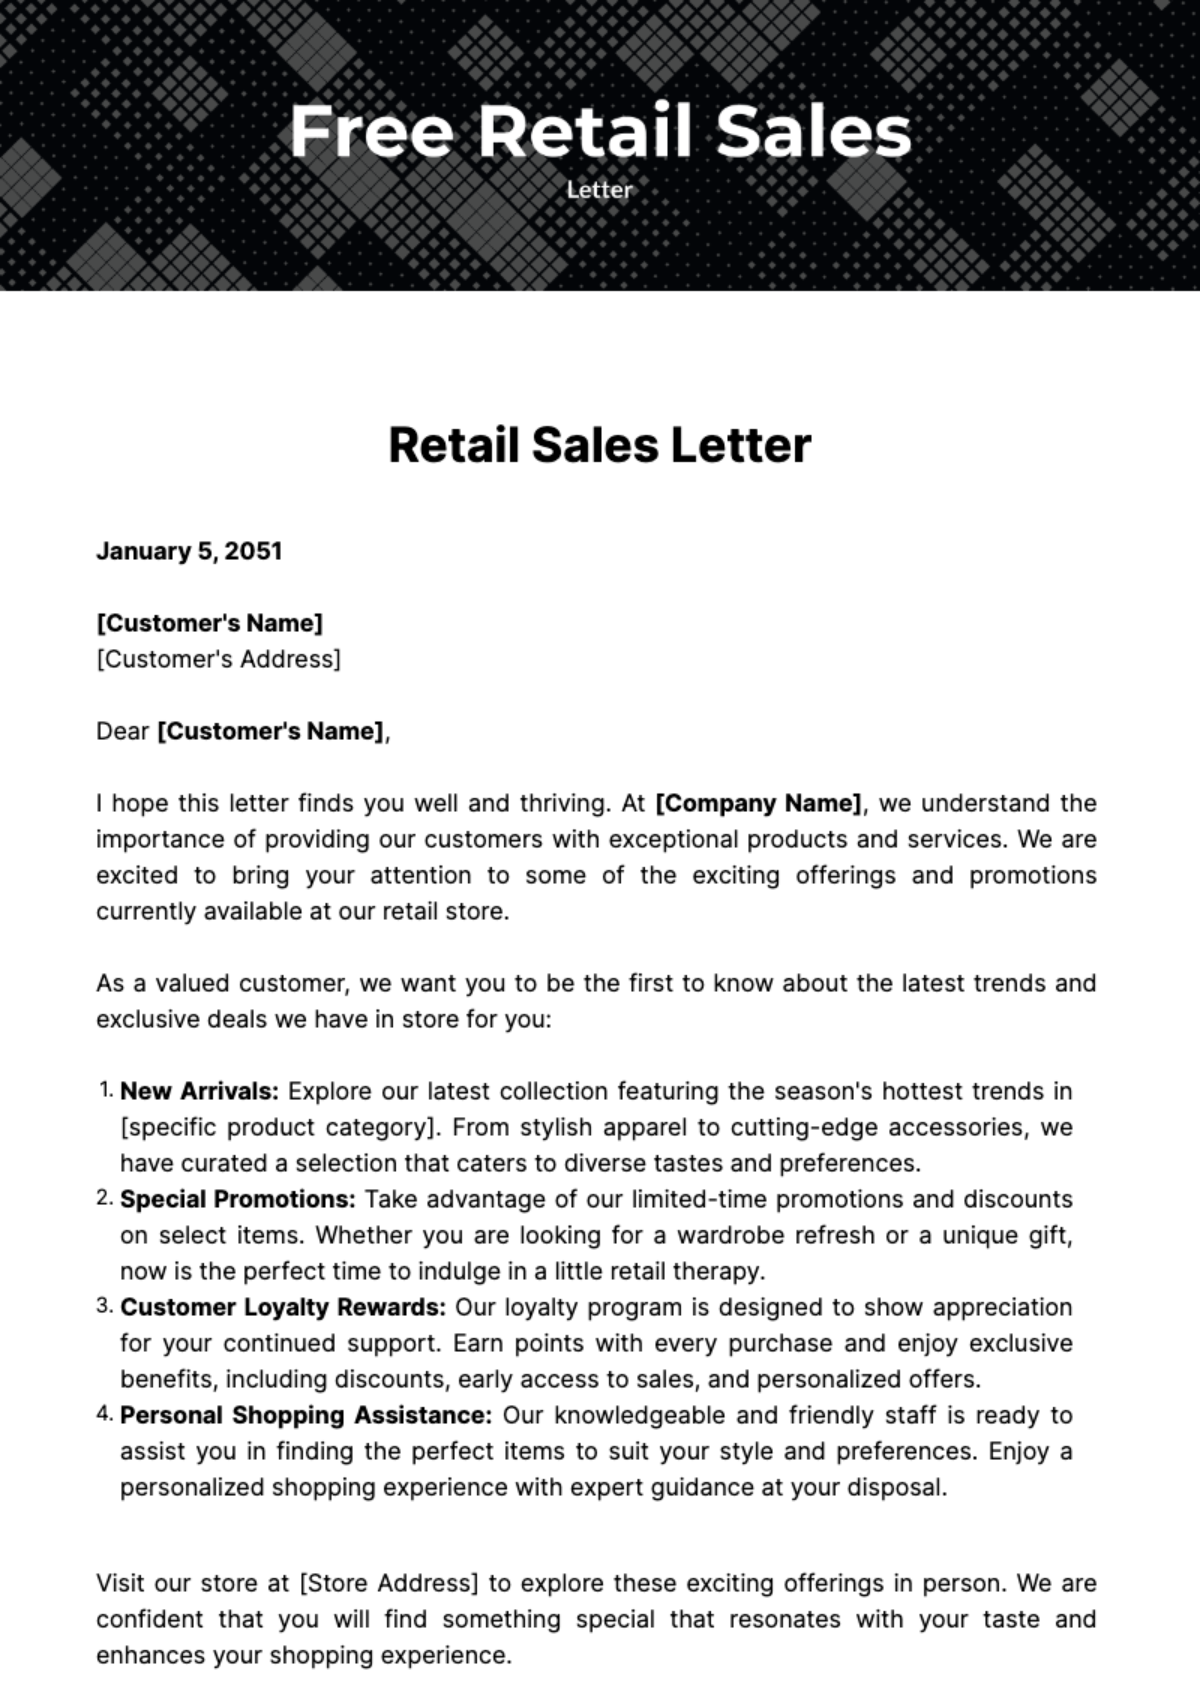 Retail Sales Letter Template